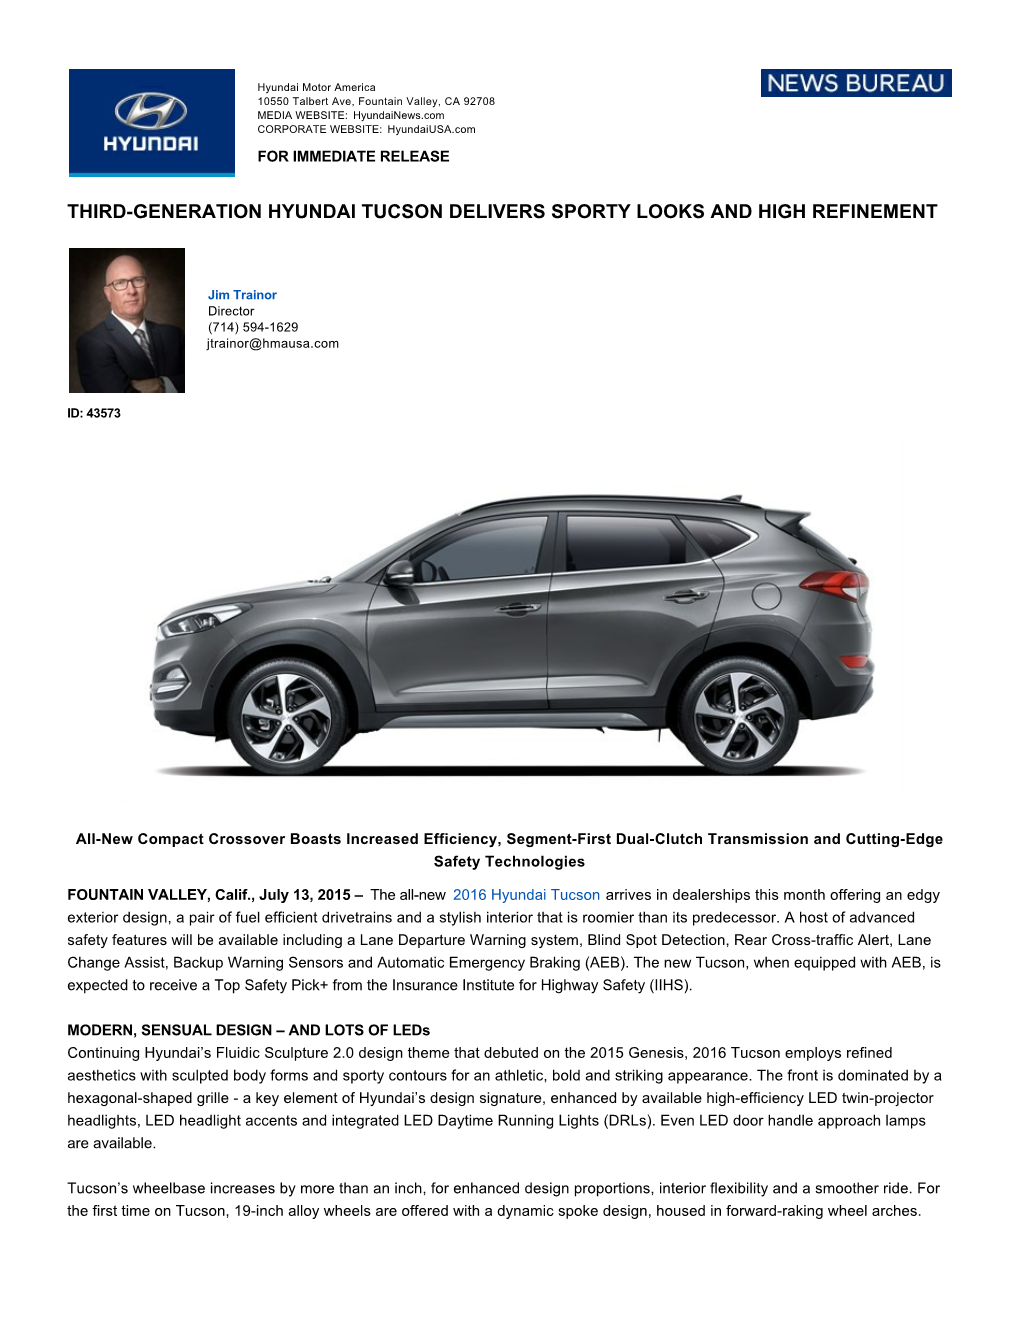 Thirdgeneration Hyundai Tucson Delivers Sporty